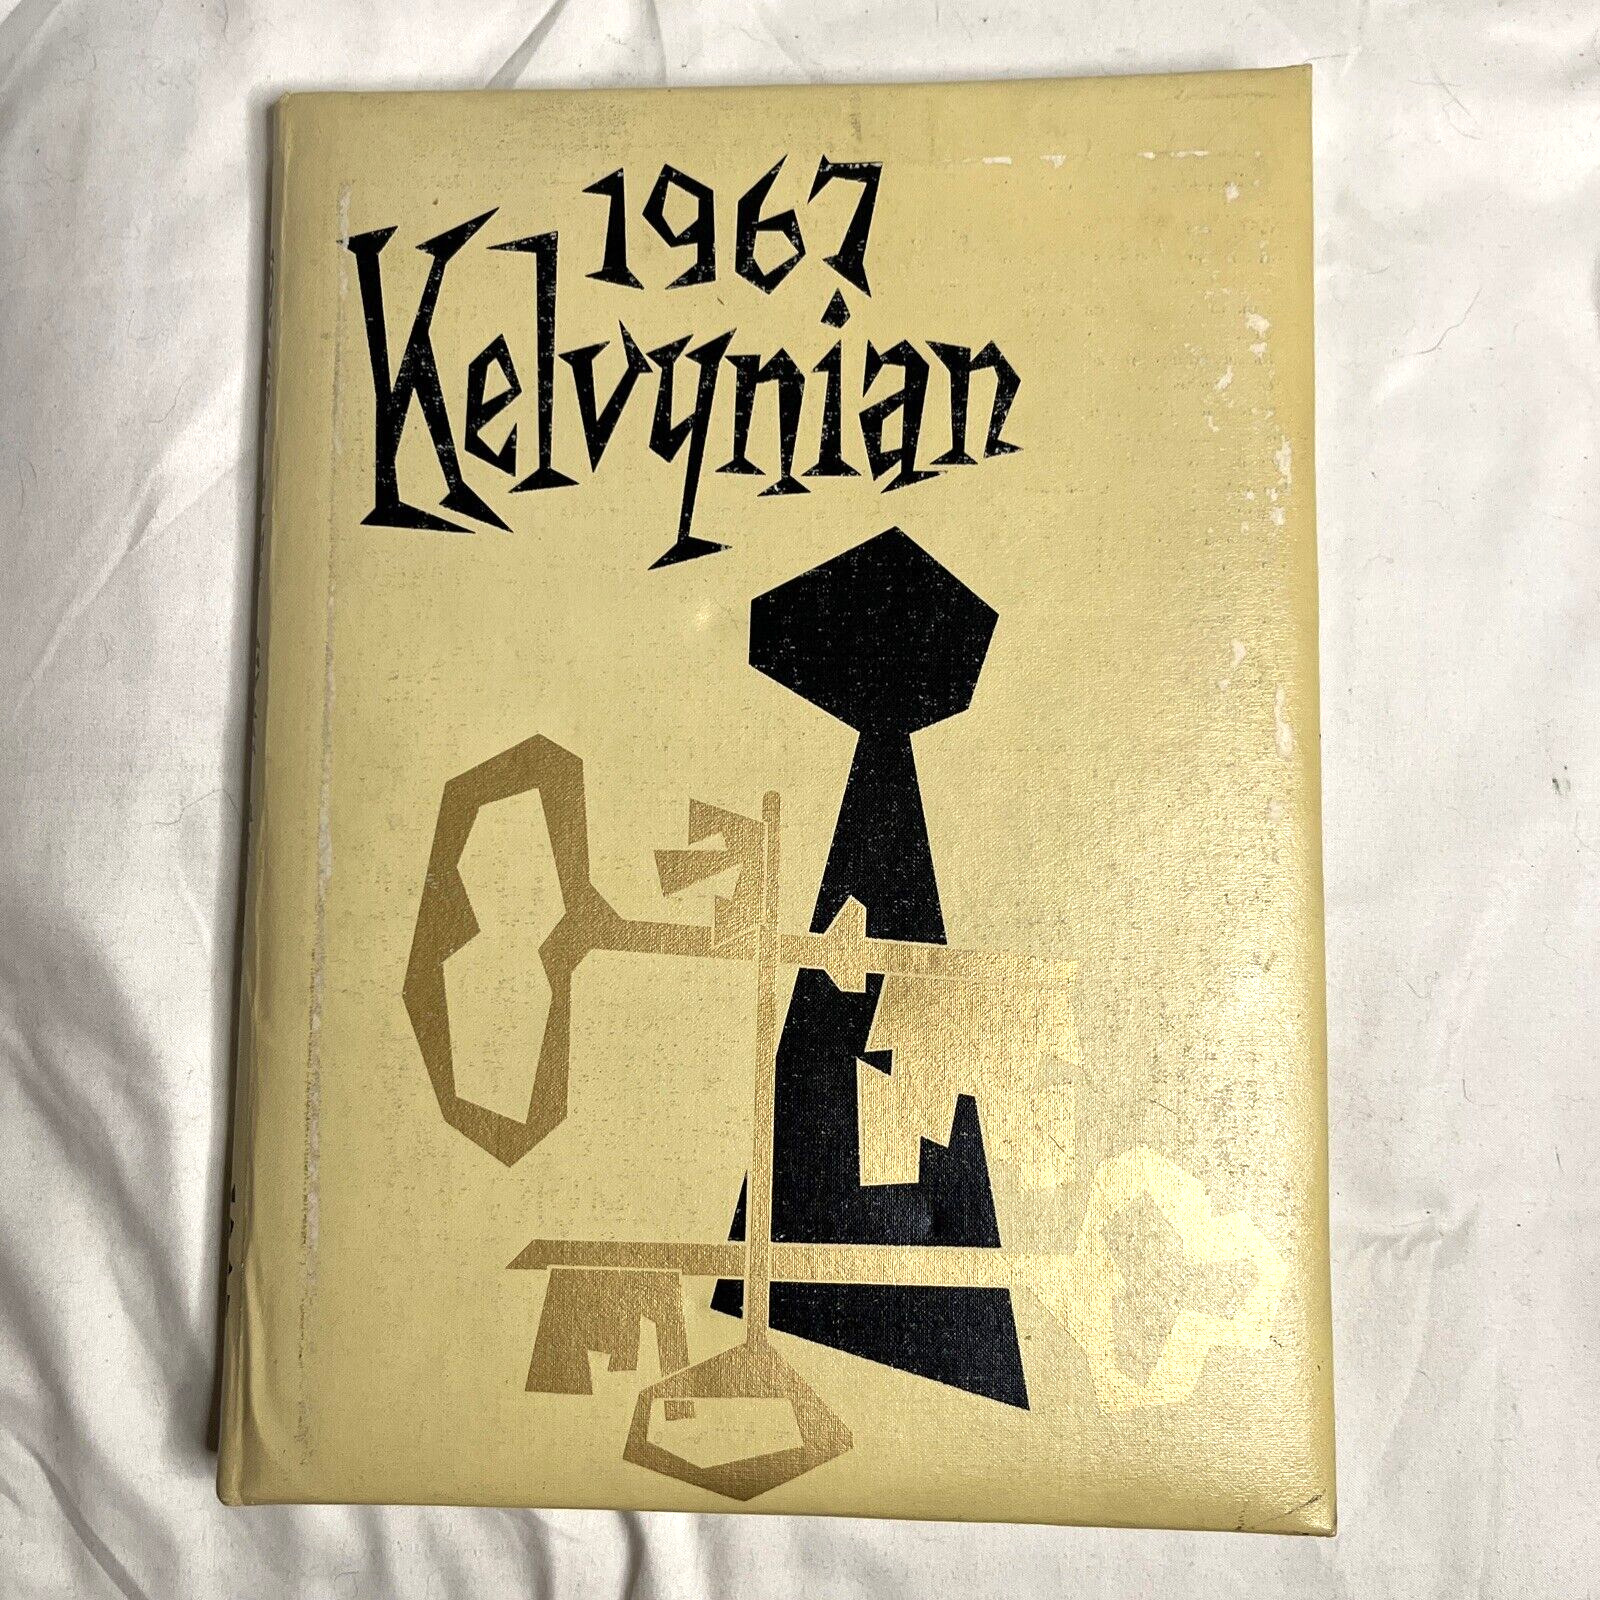 Kelvyn Park High School Yearbook 1967 Chicago Kelvynian Hardcover